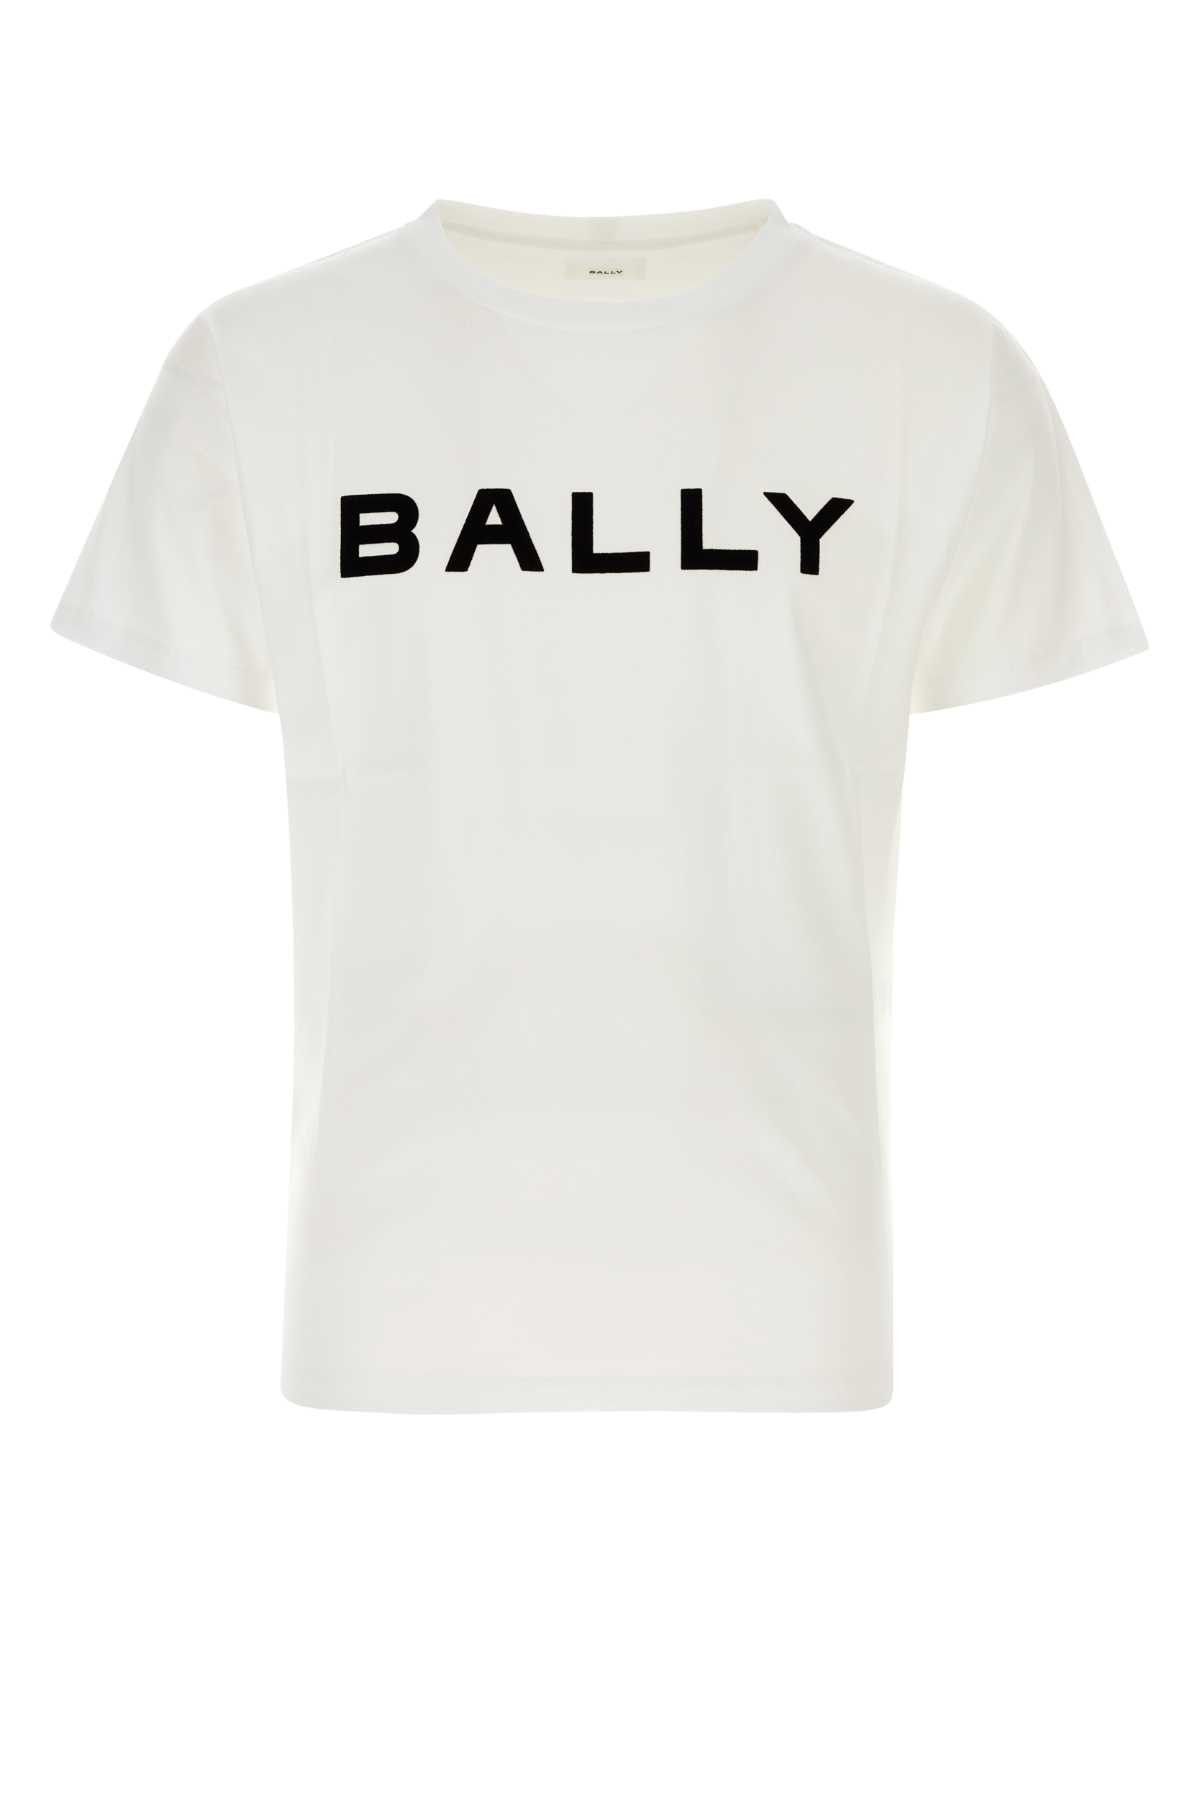 Bally T-Shirt | Grailed